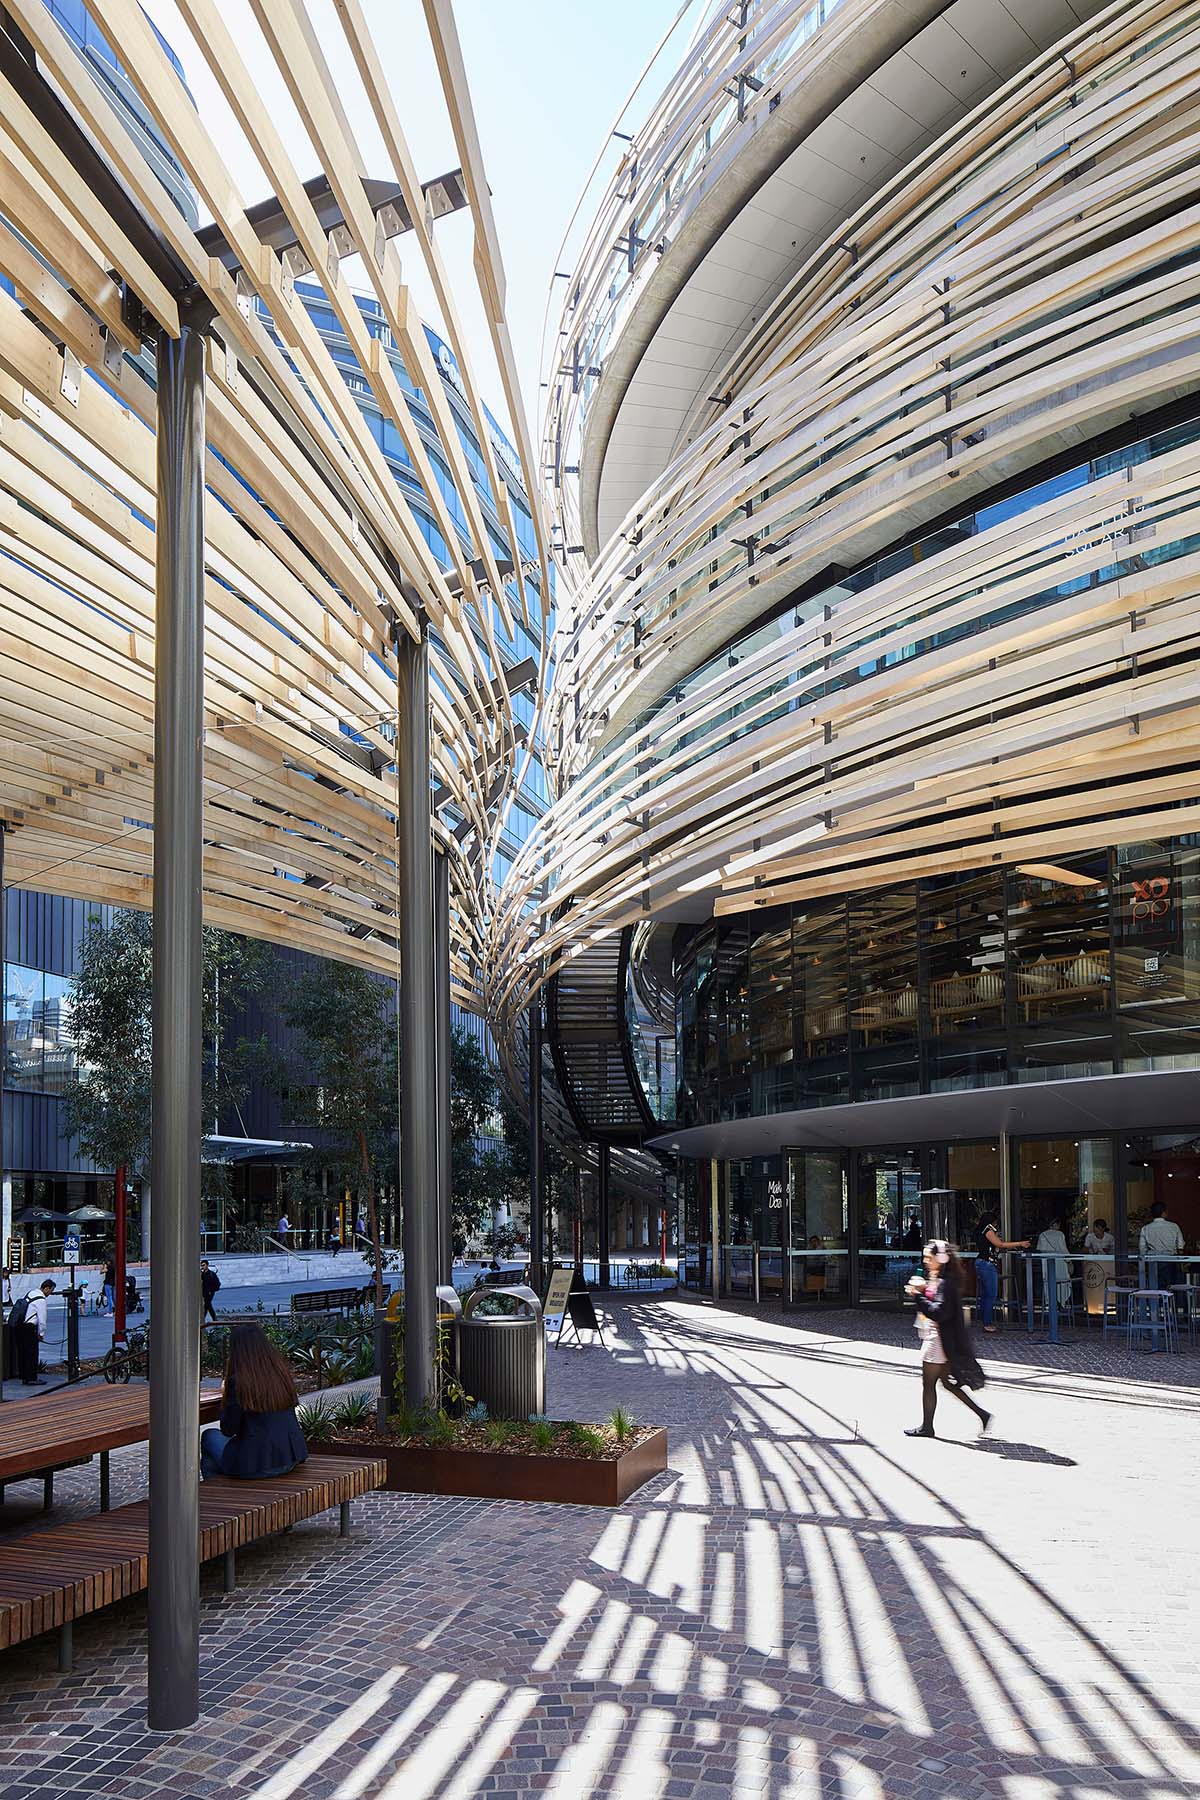 Bedst Peru pude Irregular wooden threads wrap Kengo Kuma's "The Exchange" community center  in Sydney